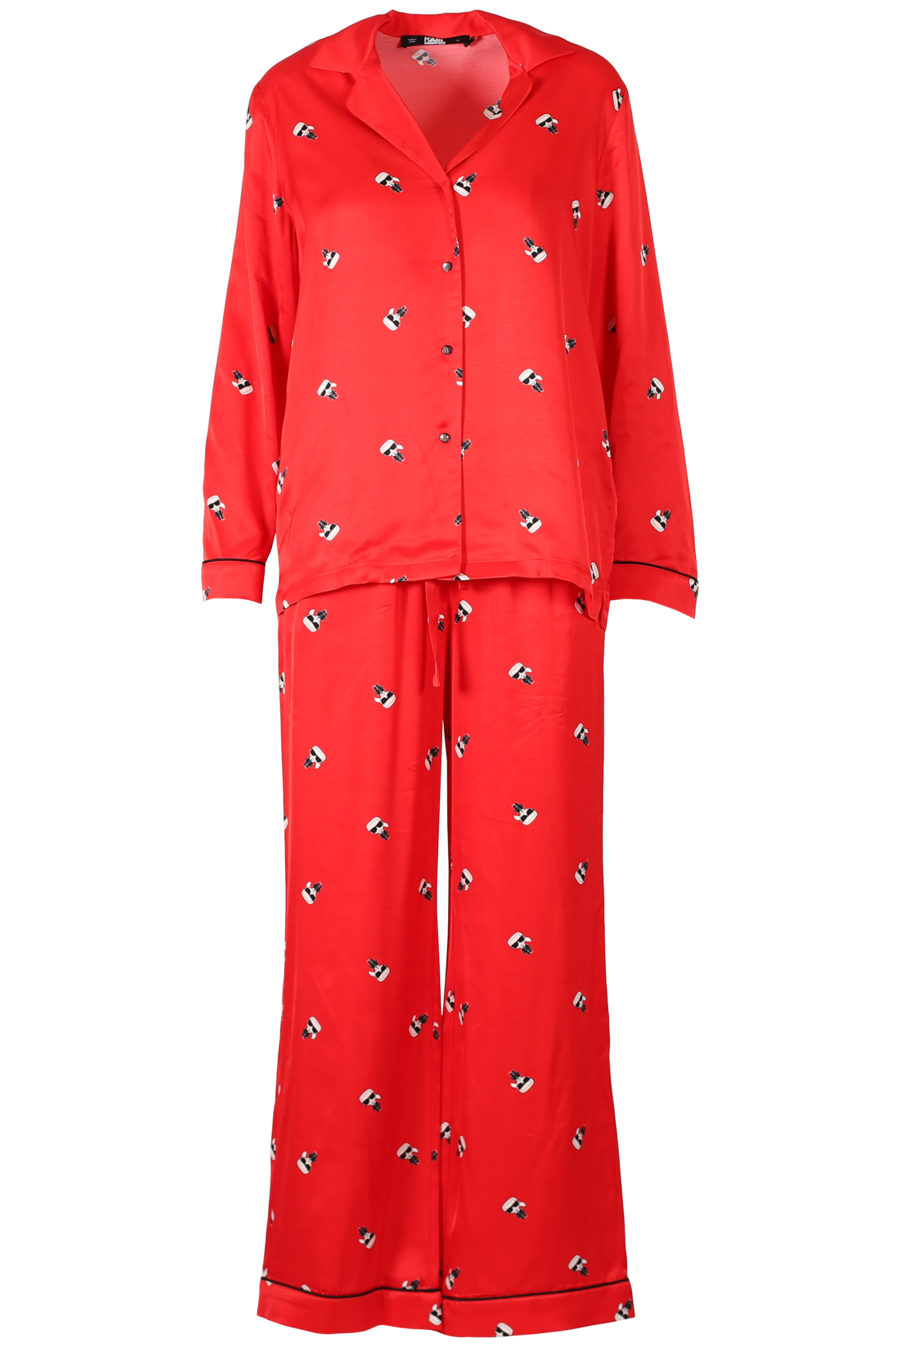 Set de regalo pijama de satén color rojo - IMG 3289